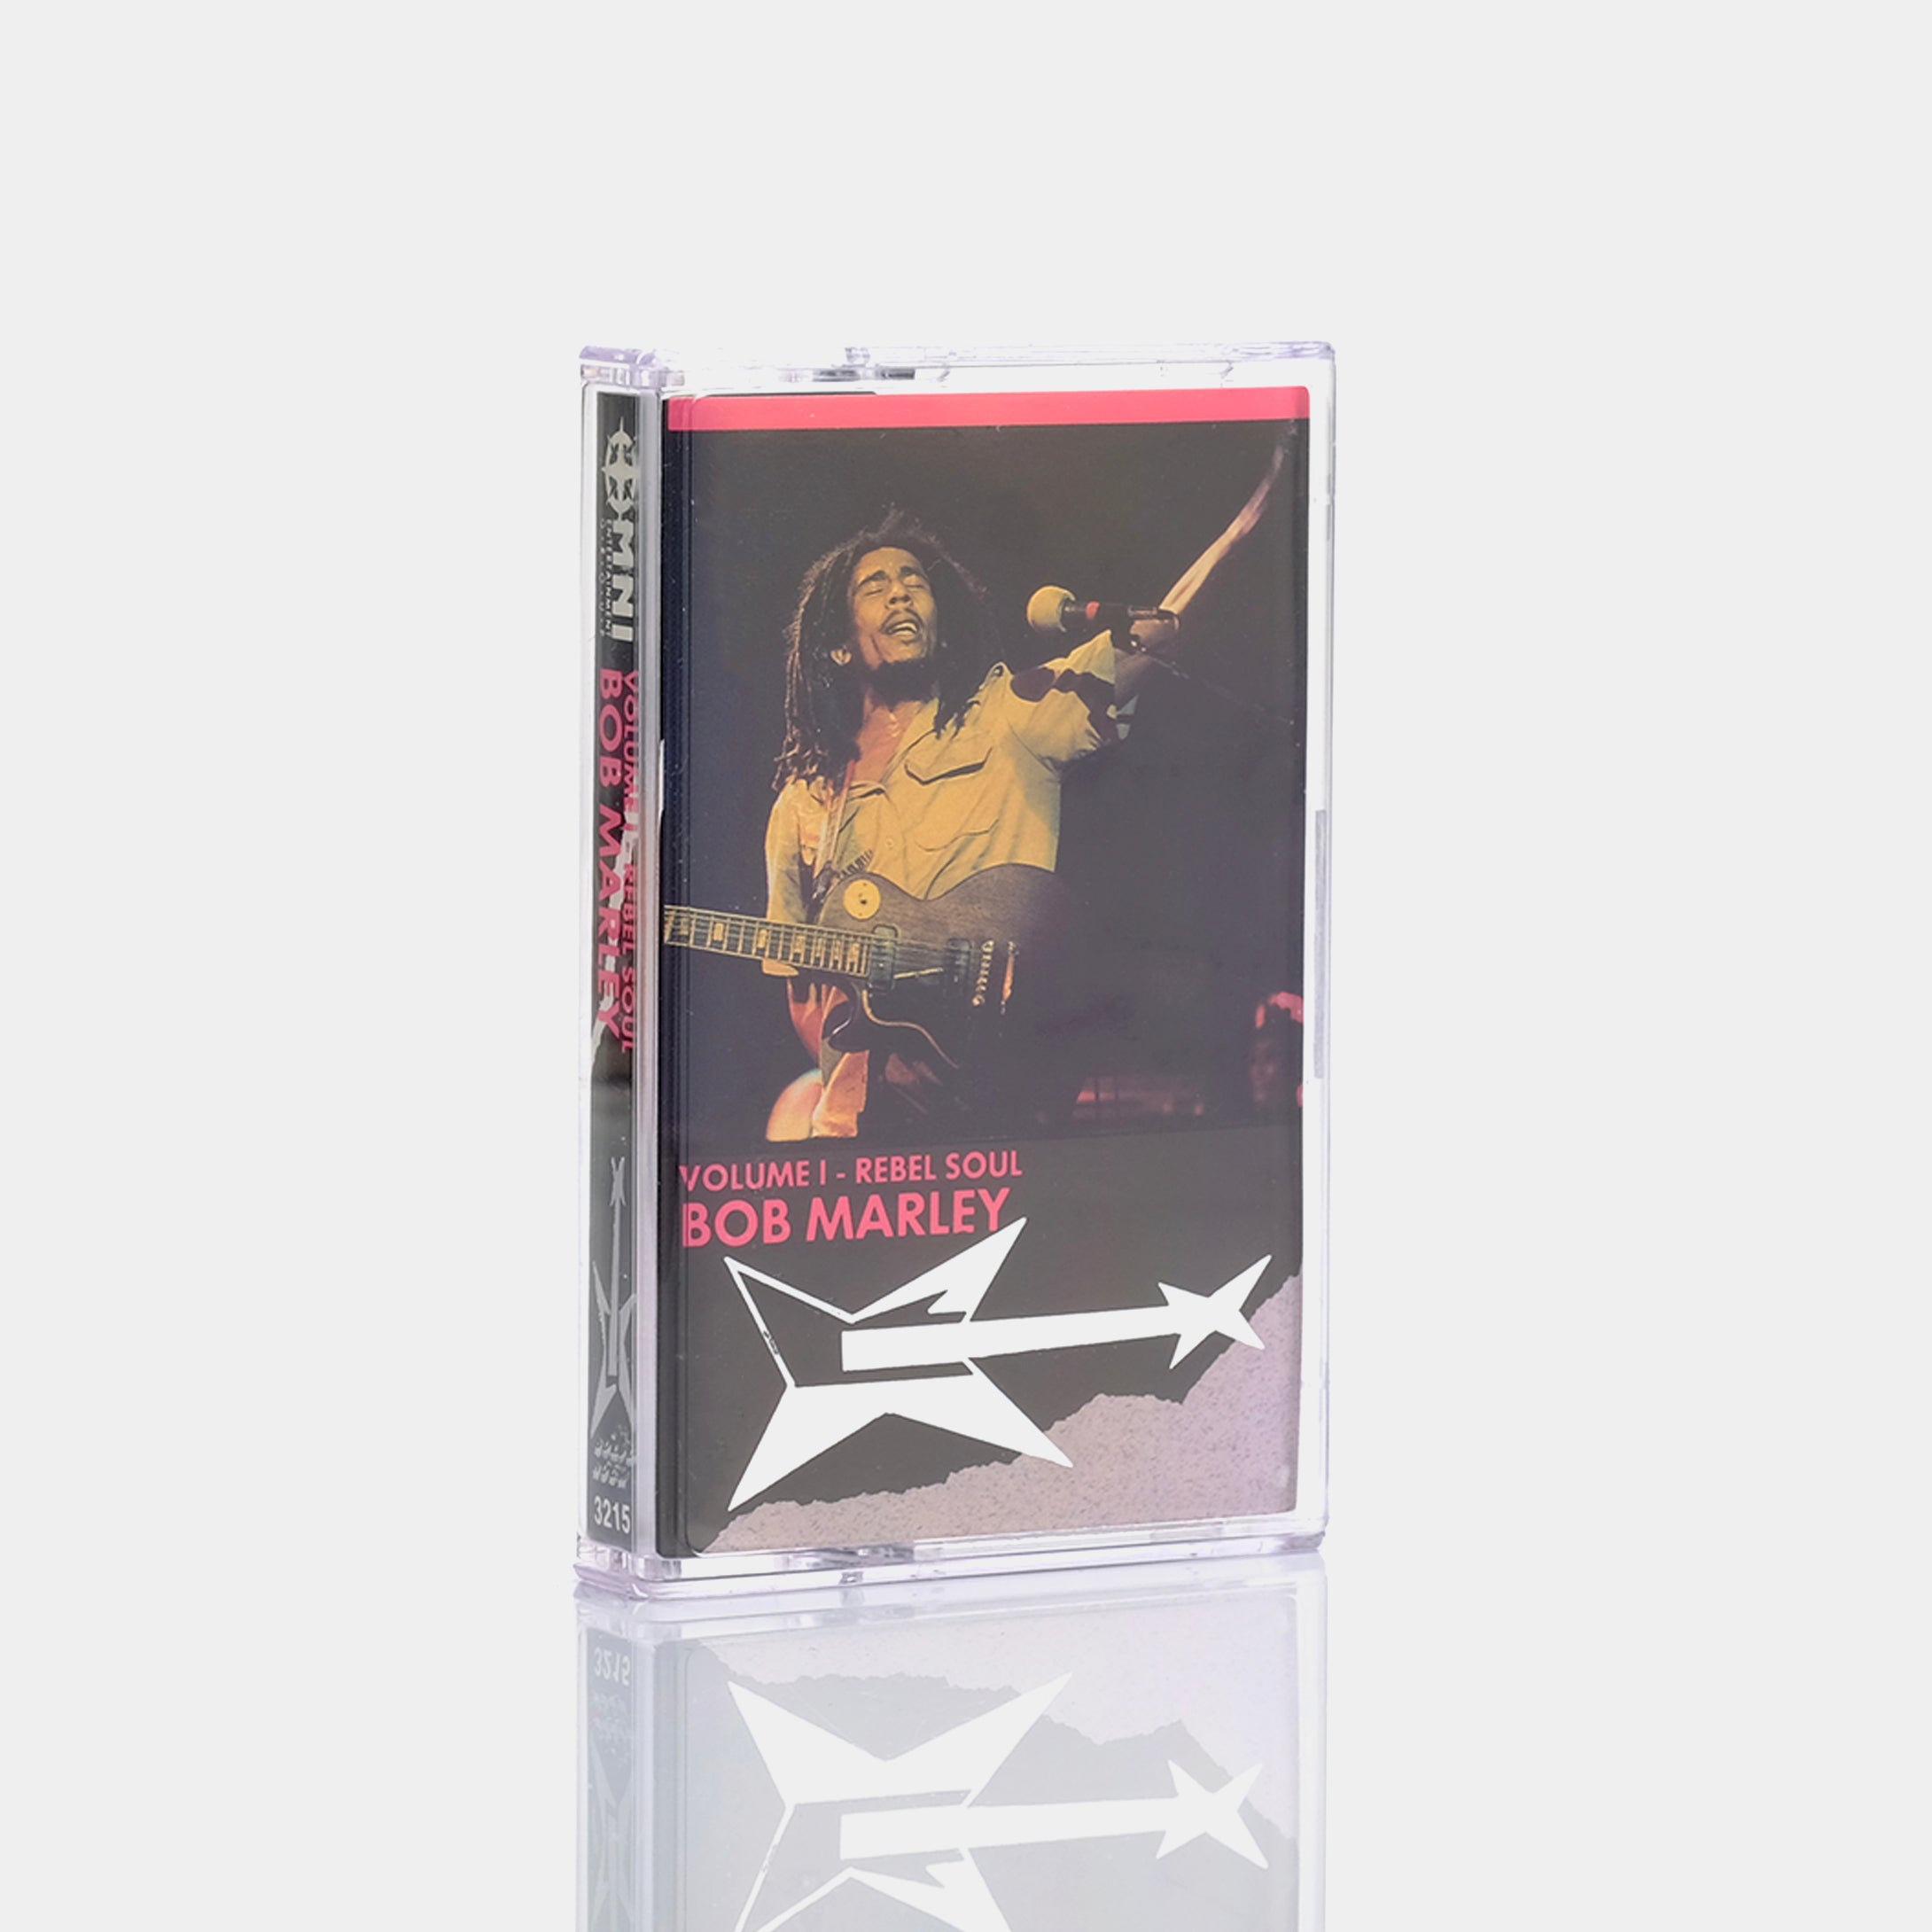 Bob Marley - Vol. 1 Rebel Soul Cassette Tape